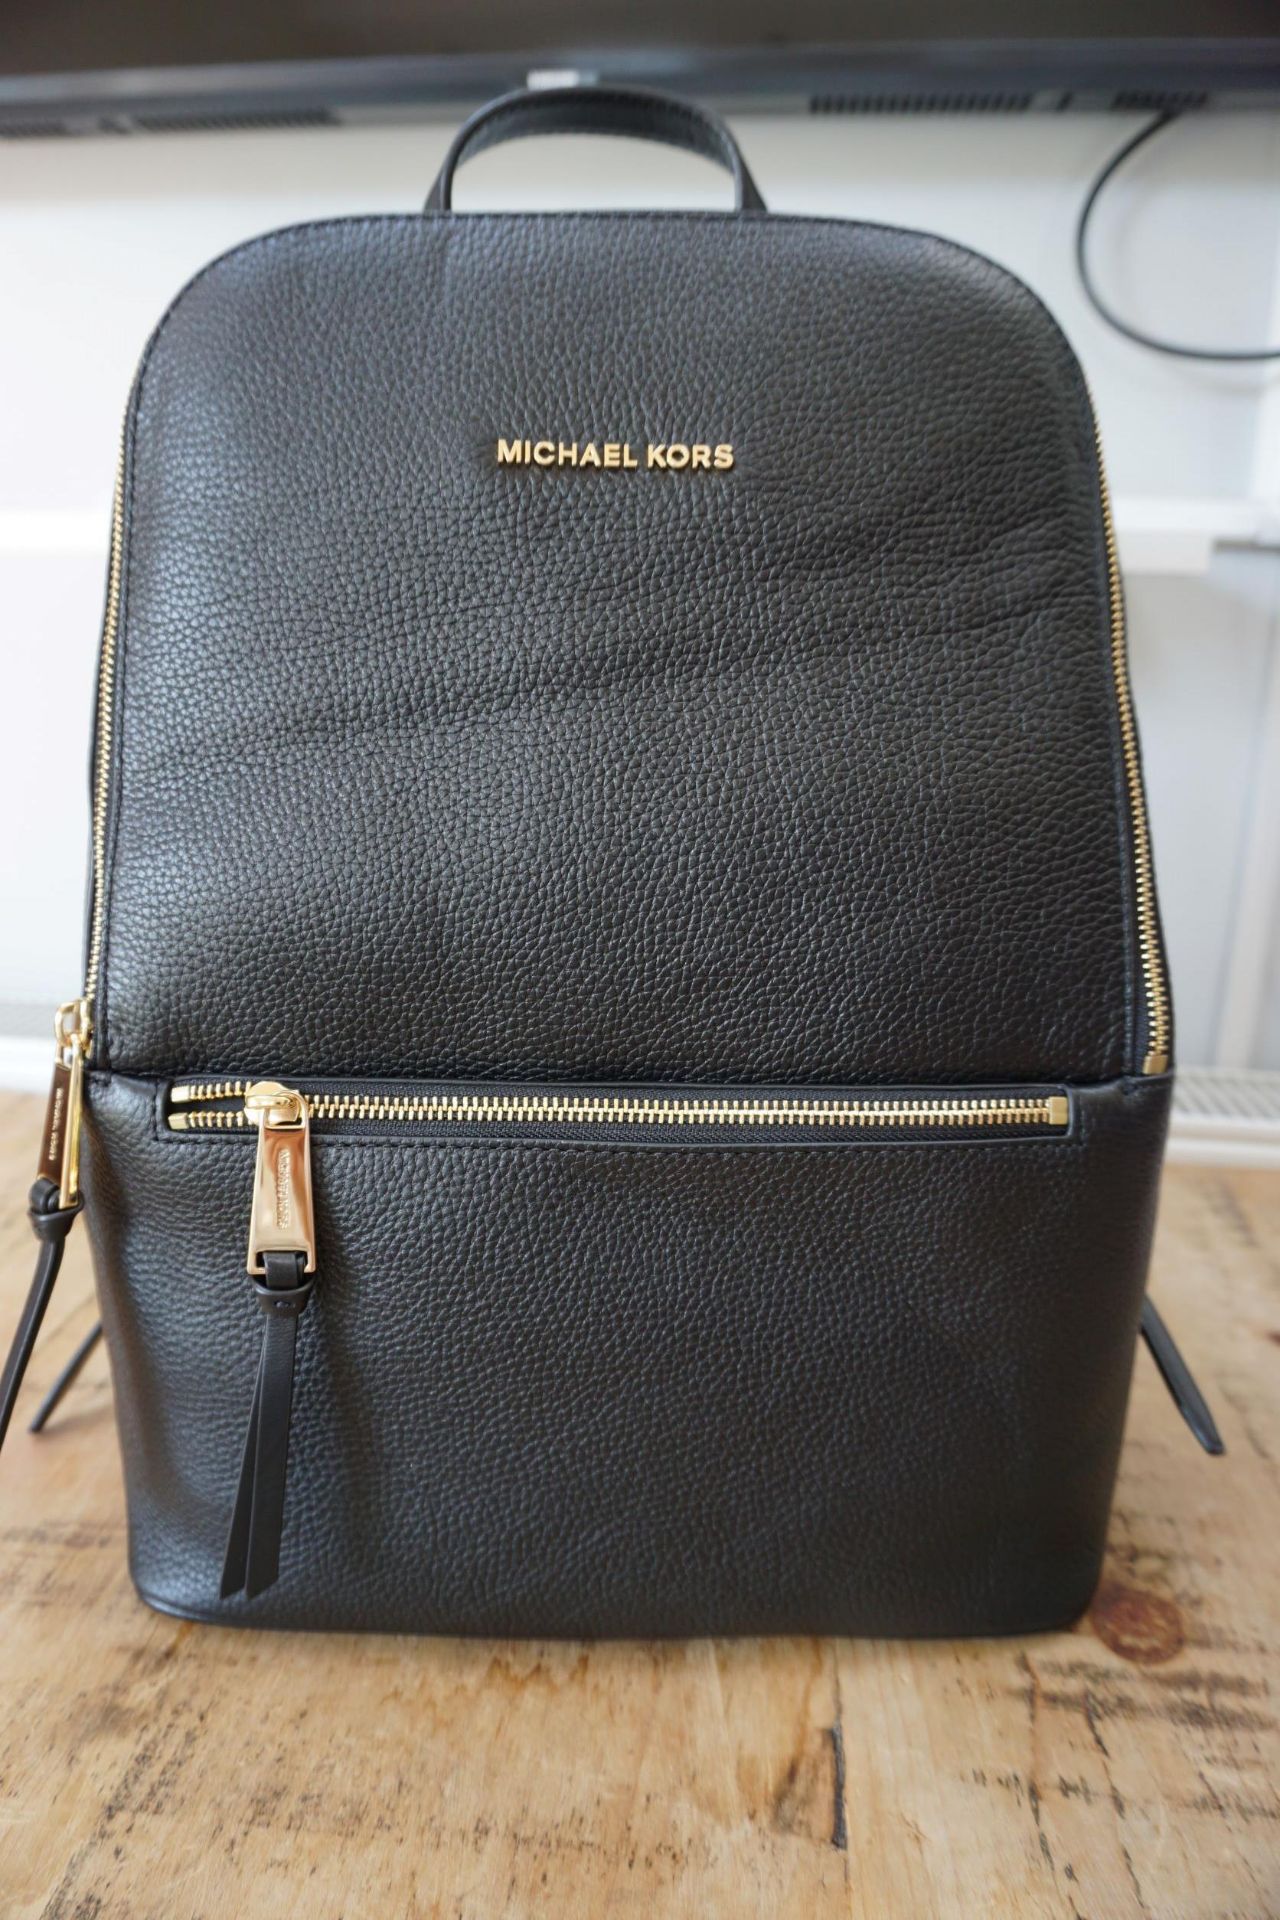 Michael Kors Toby Medium Backpack Black